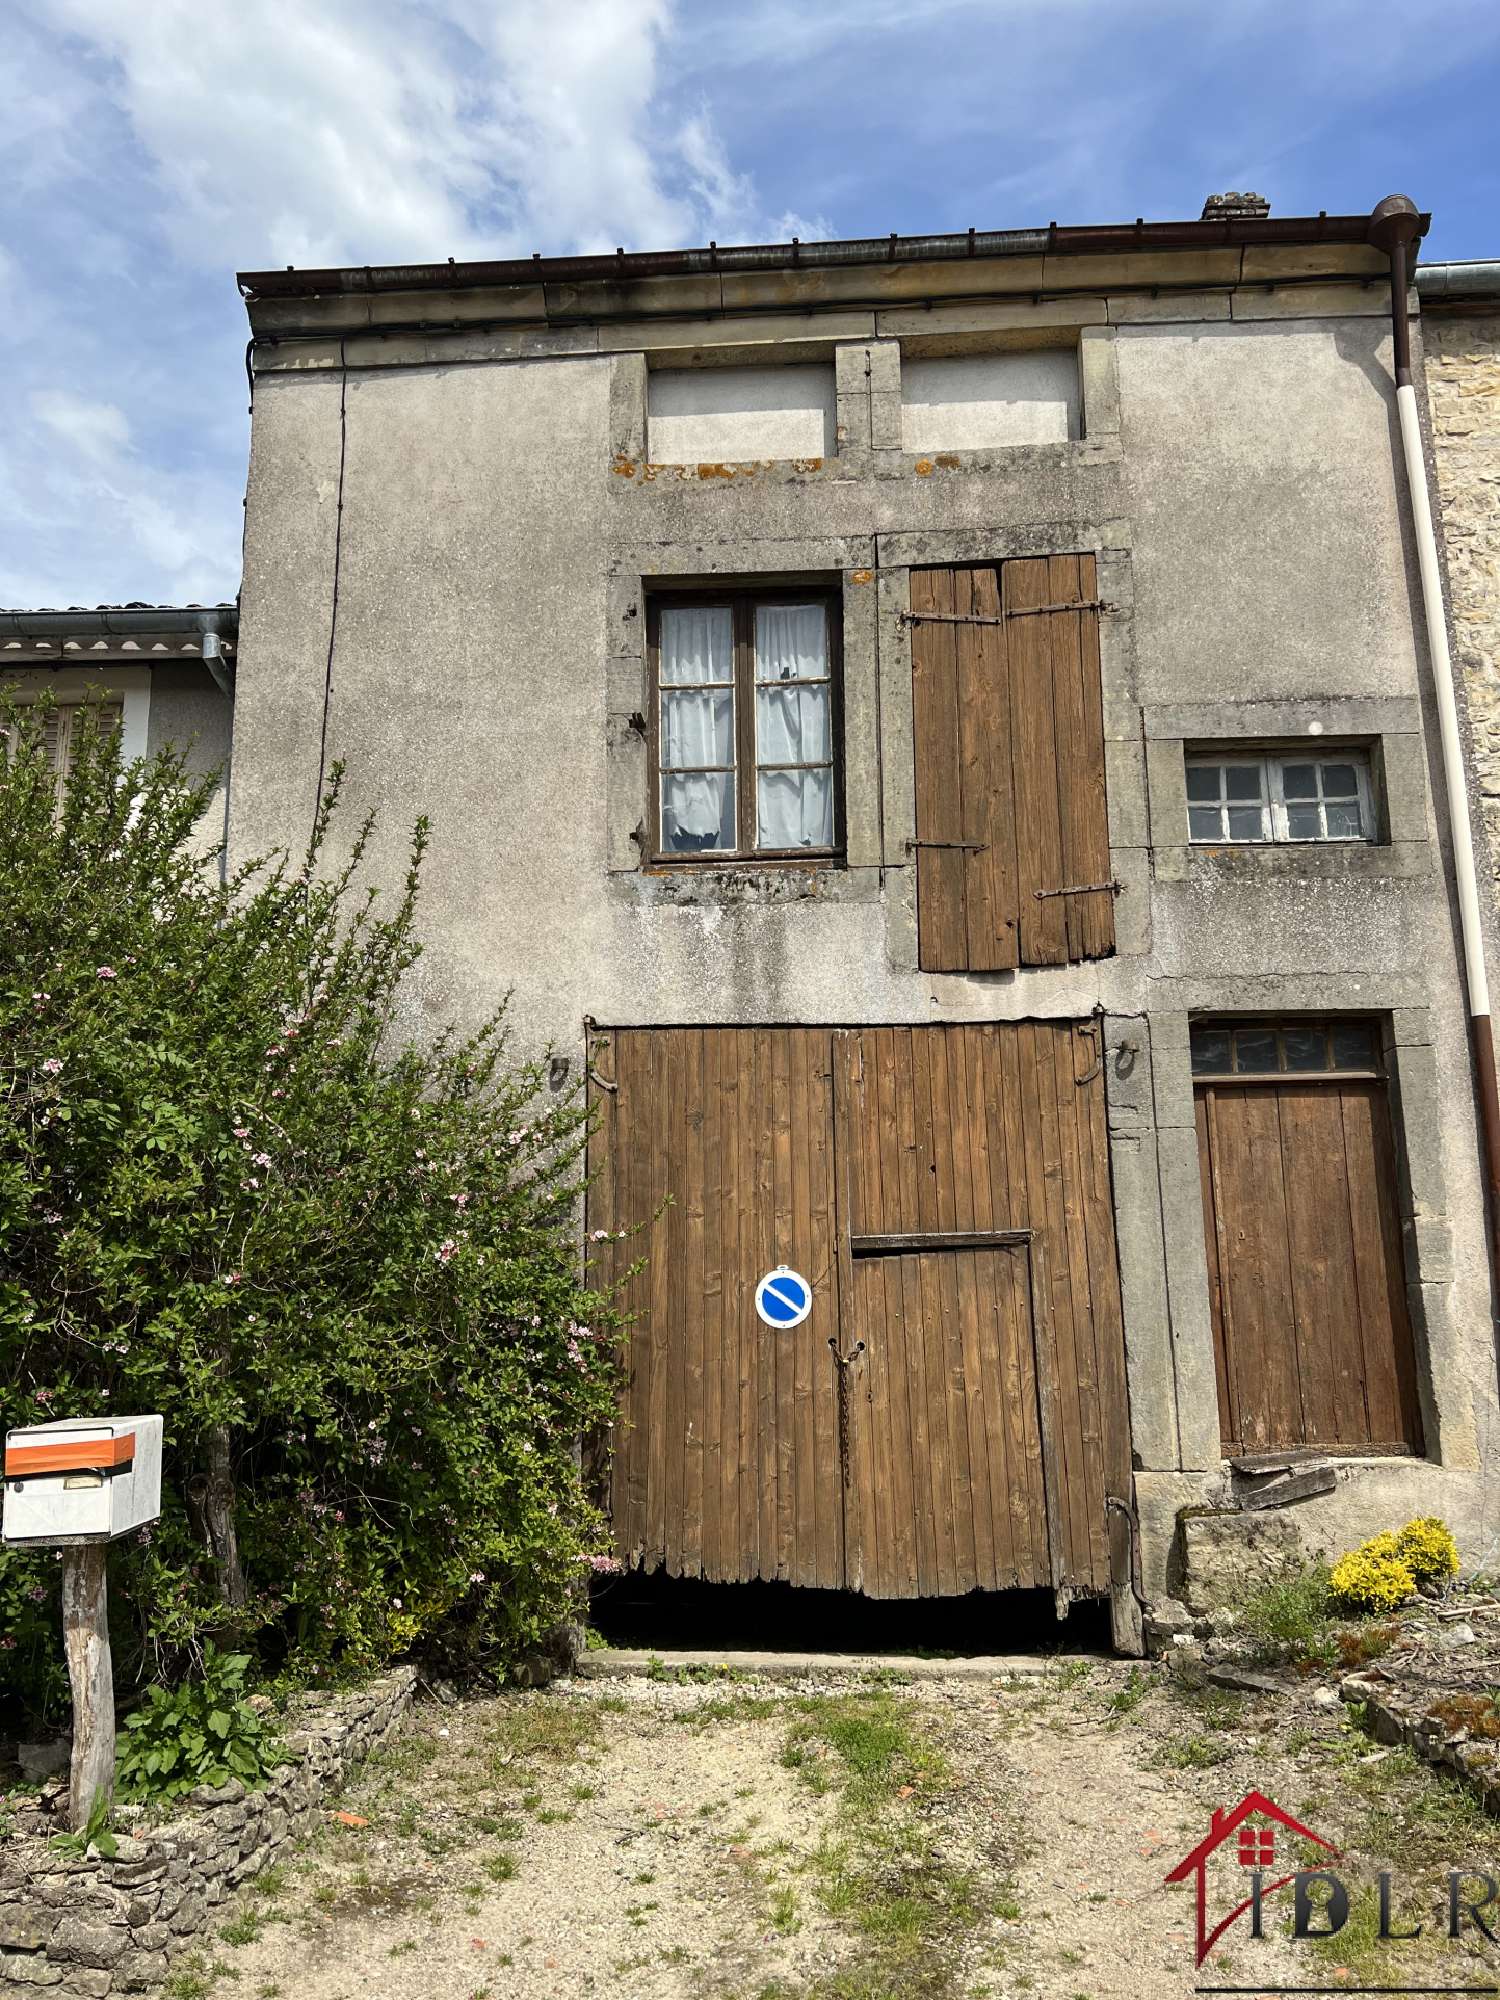  for sale village house Voisey Haute-Marne 2